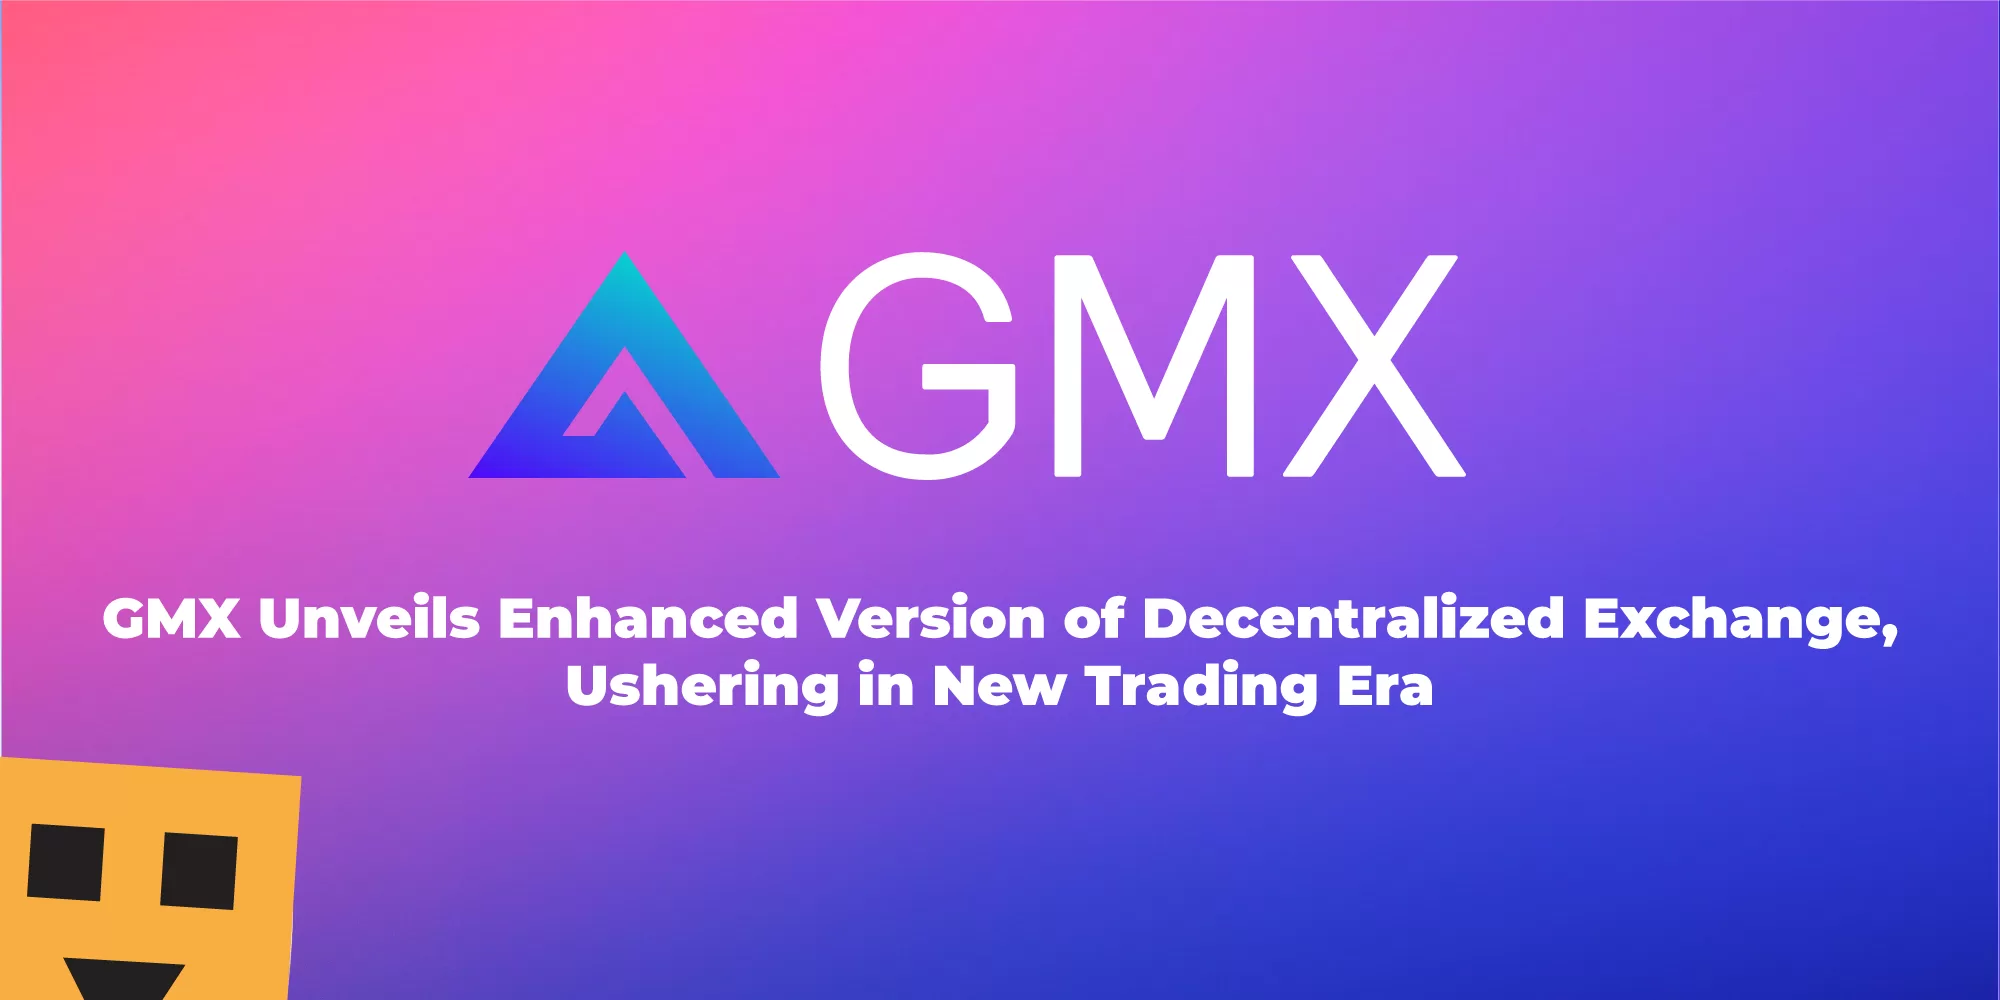 GMX Unveils Enhanced Version of Decentralized Exchange, Ushering in New Trading Era